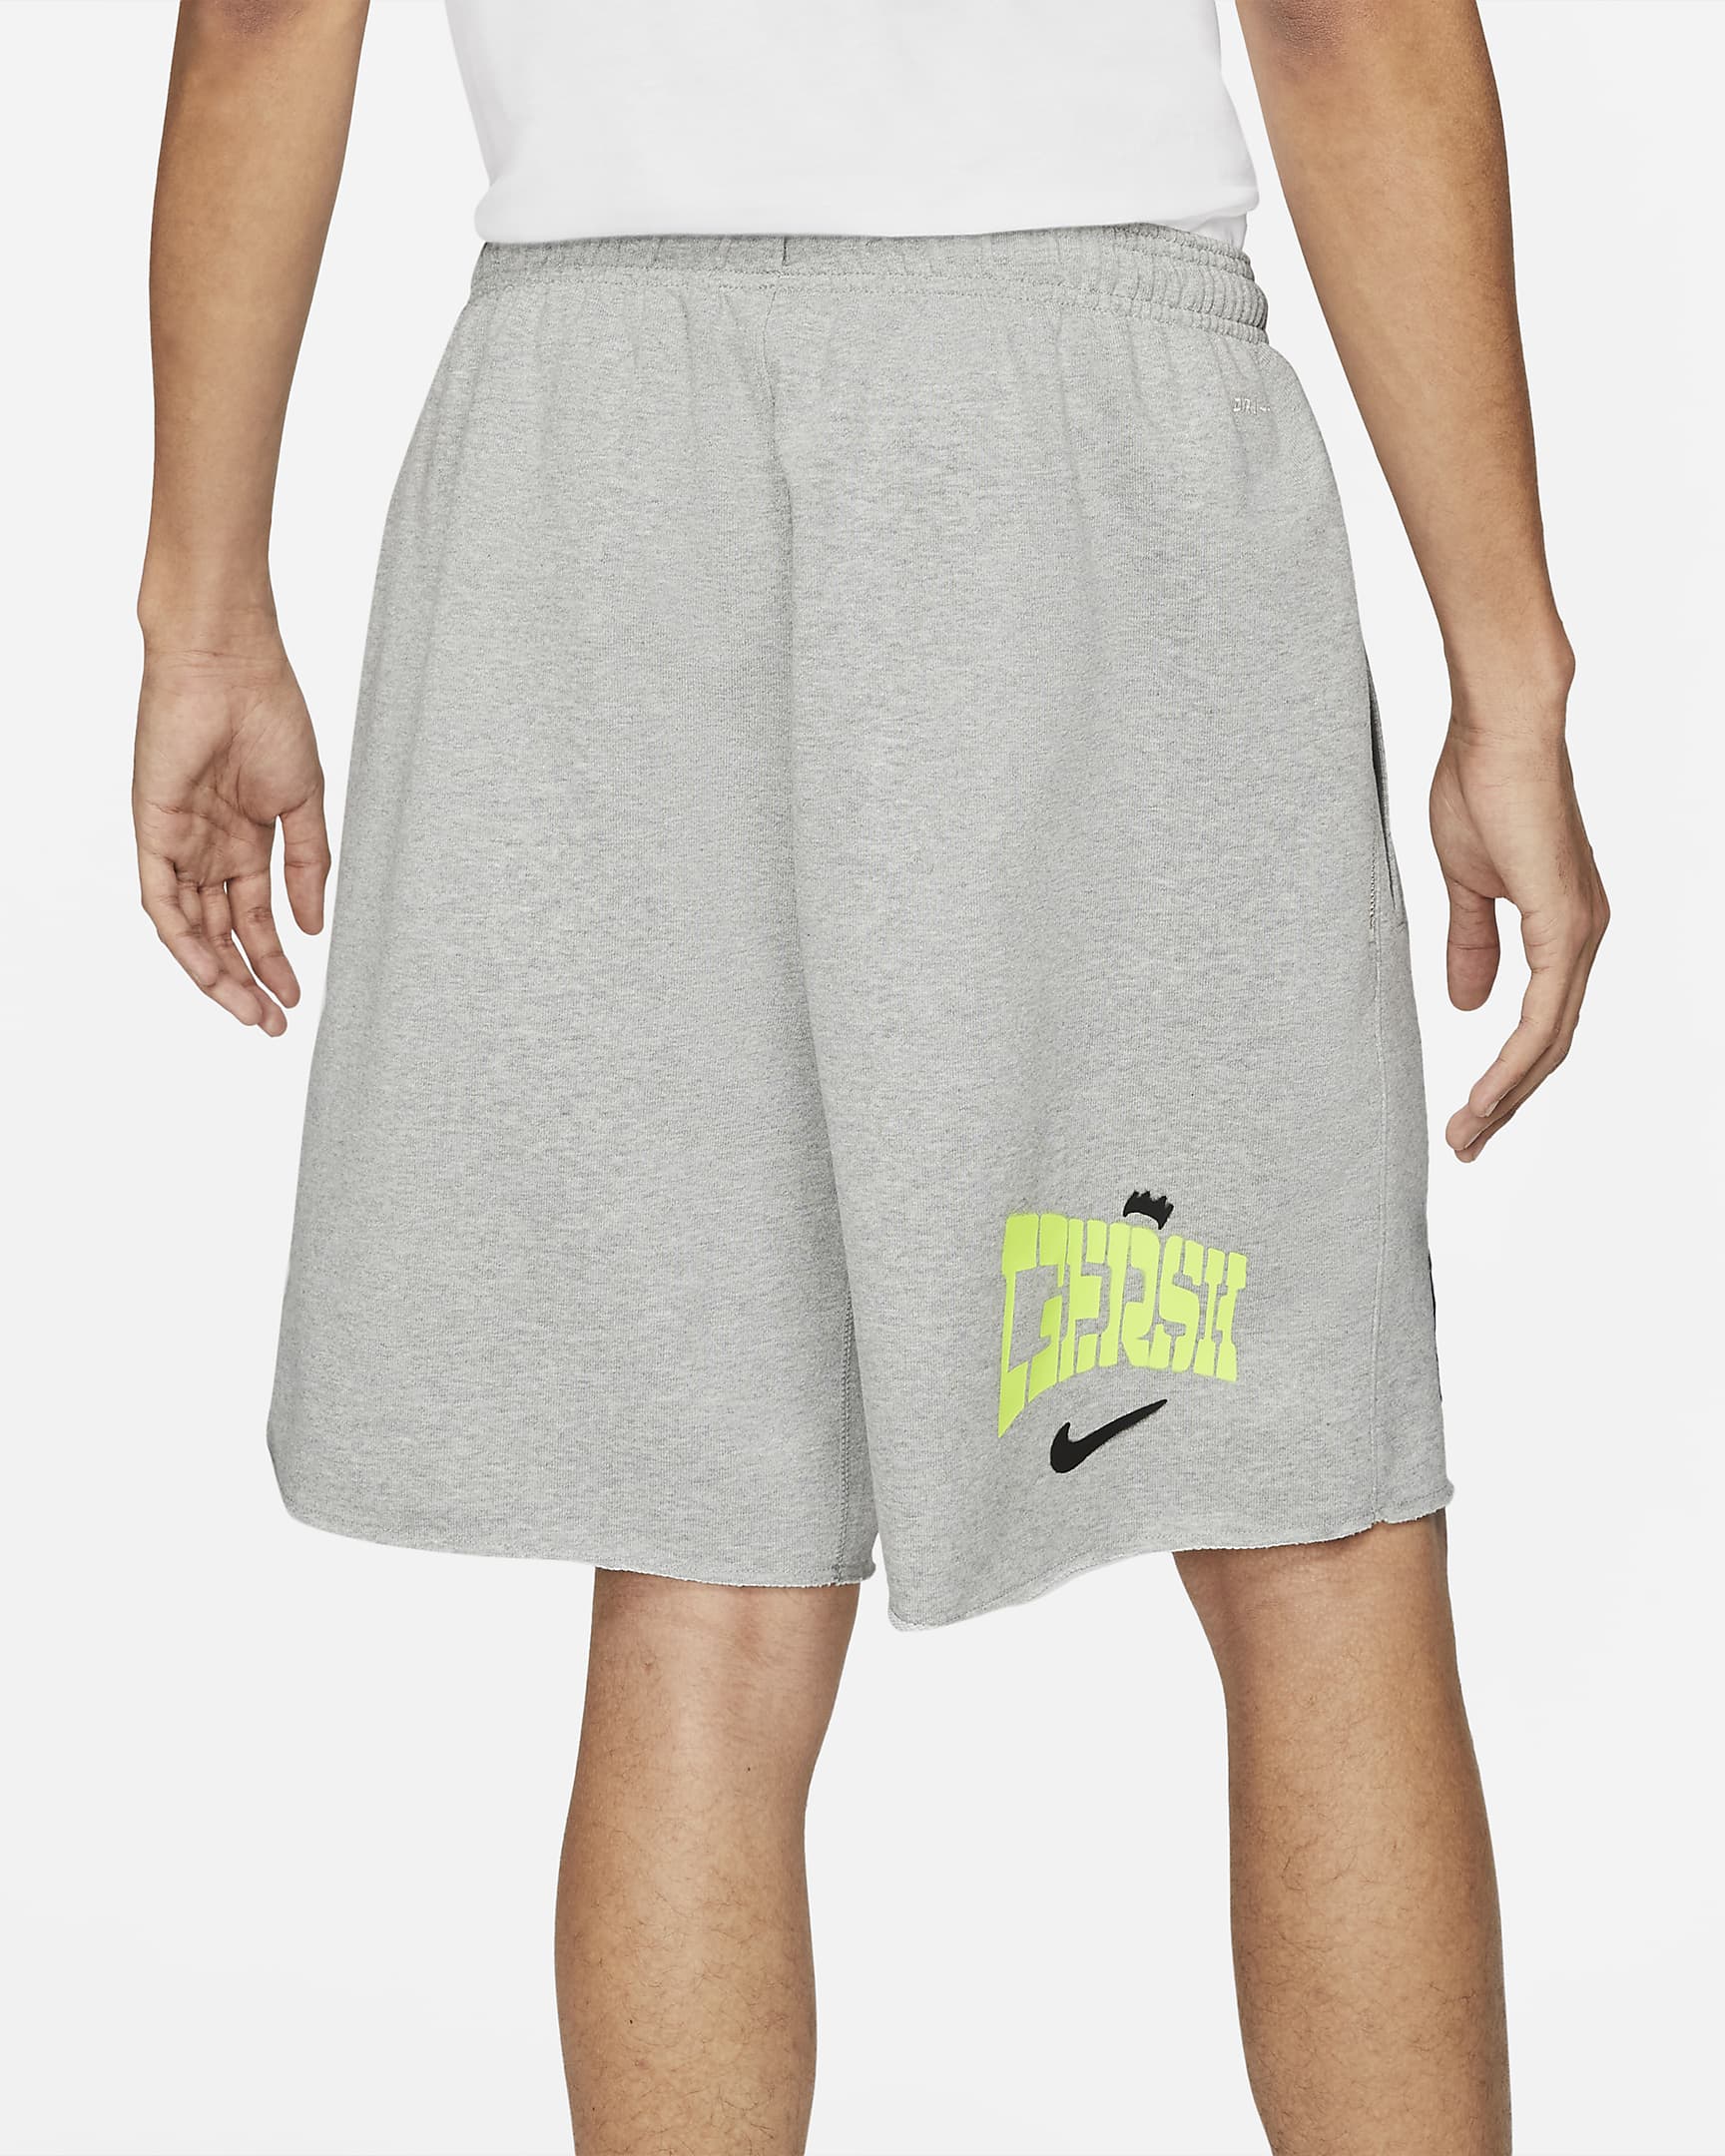 standard-issue-gersh-park-mens-basketball-fleece-shorts-VfcLxg-1.png